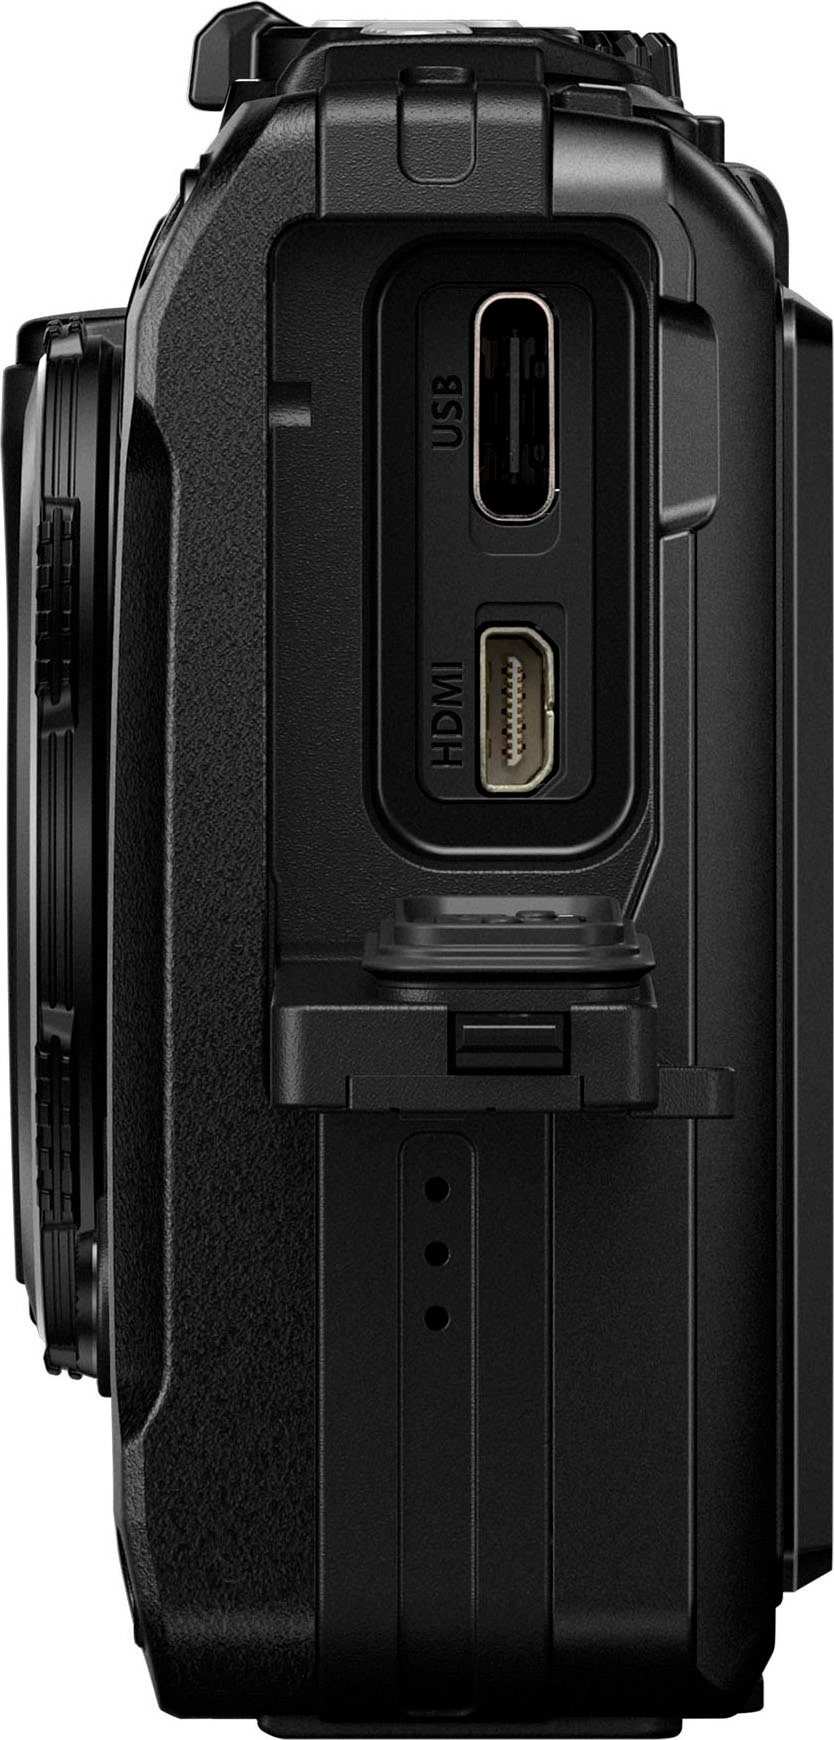 schwarz Tough WLAN (12 Kompaktkamera TG-7 MP, Olympus Zoom, 4x (Wi-Fi) Bluetooth, opt.